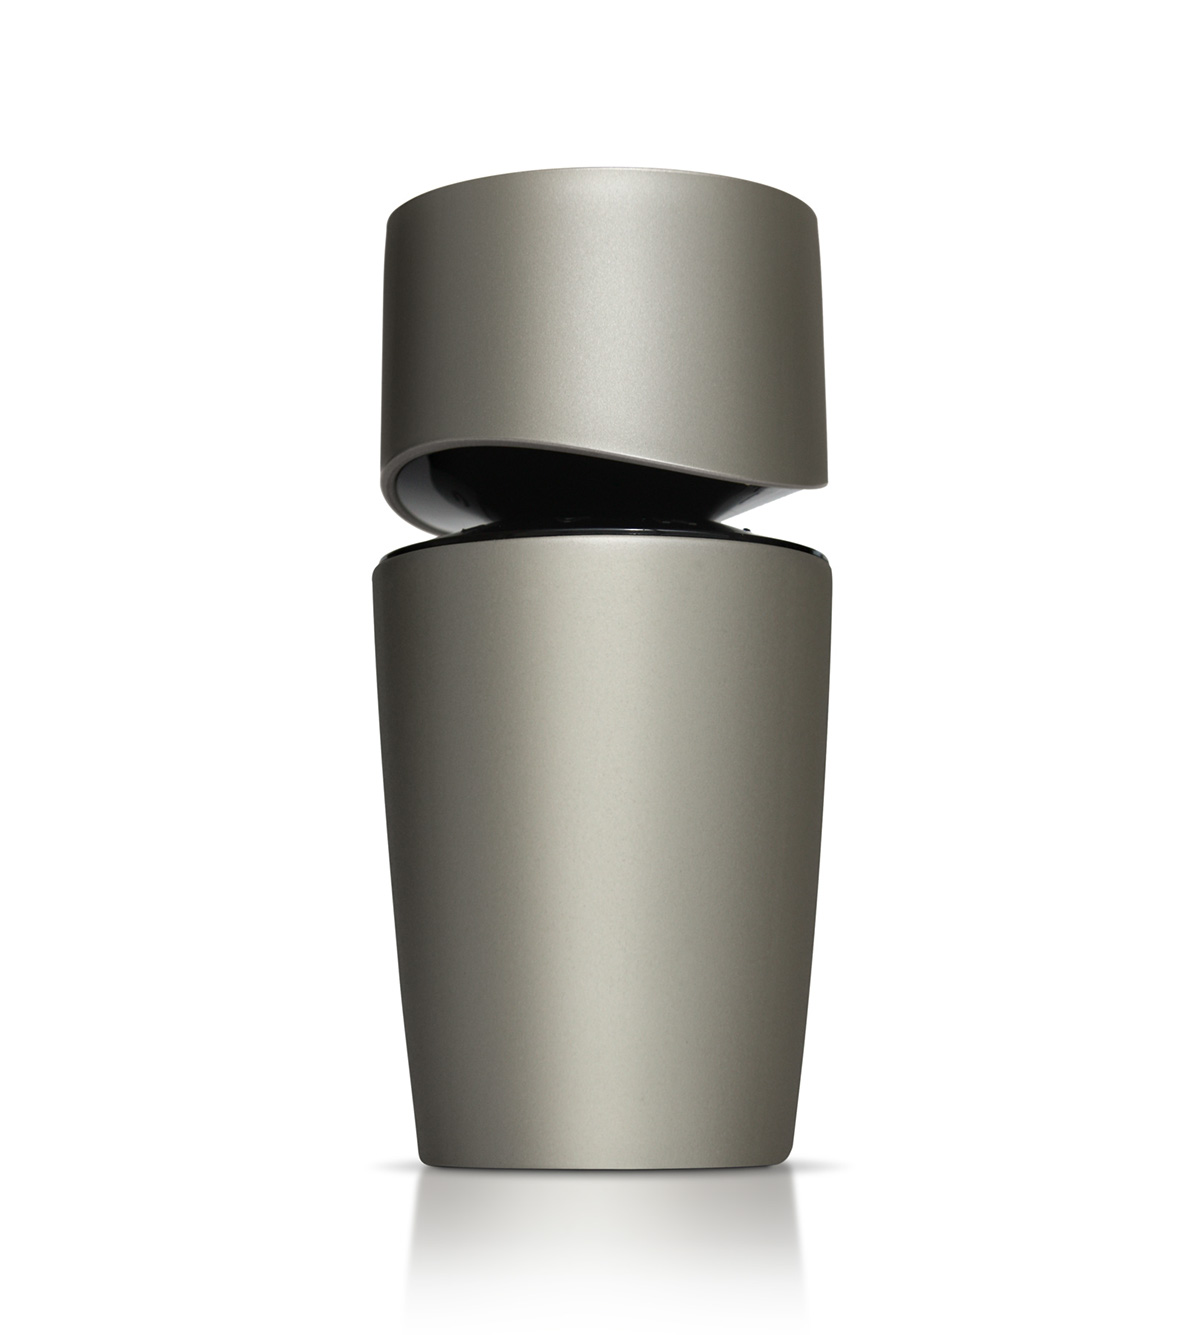 product design  design graphic bottle Packaging Fragrance perfume cologne elegance male